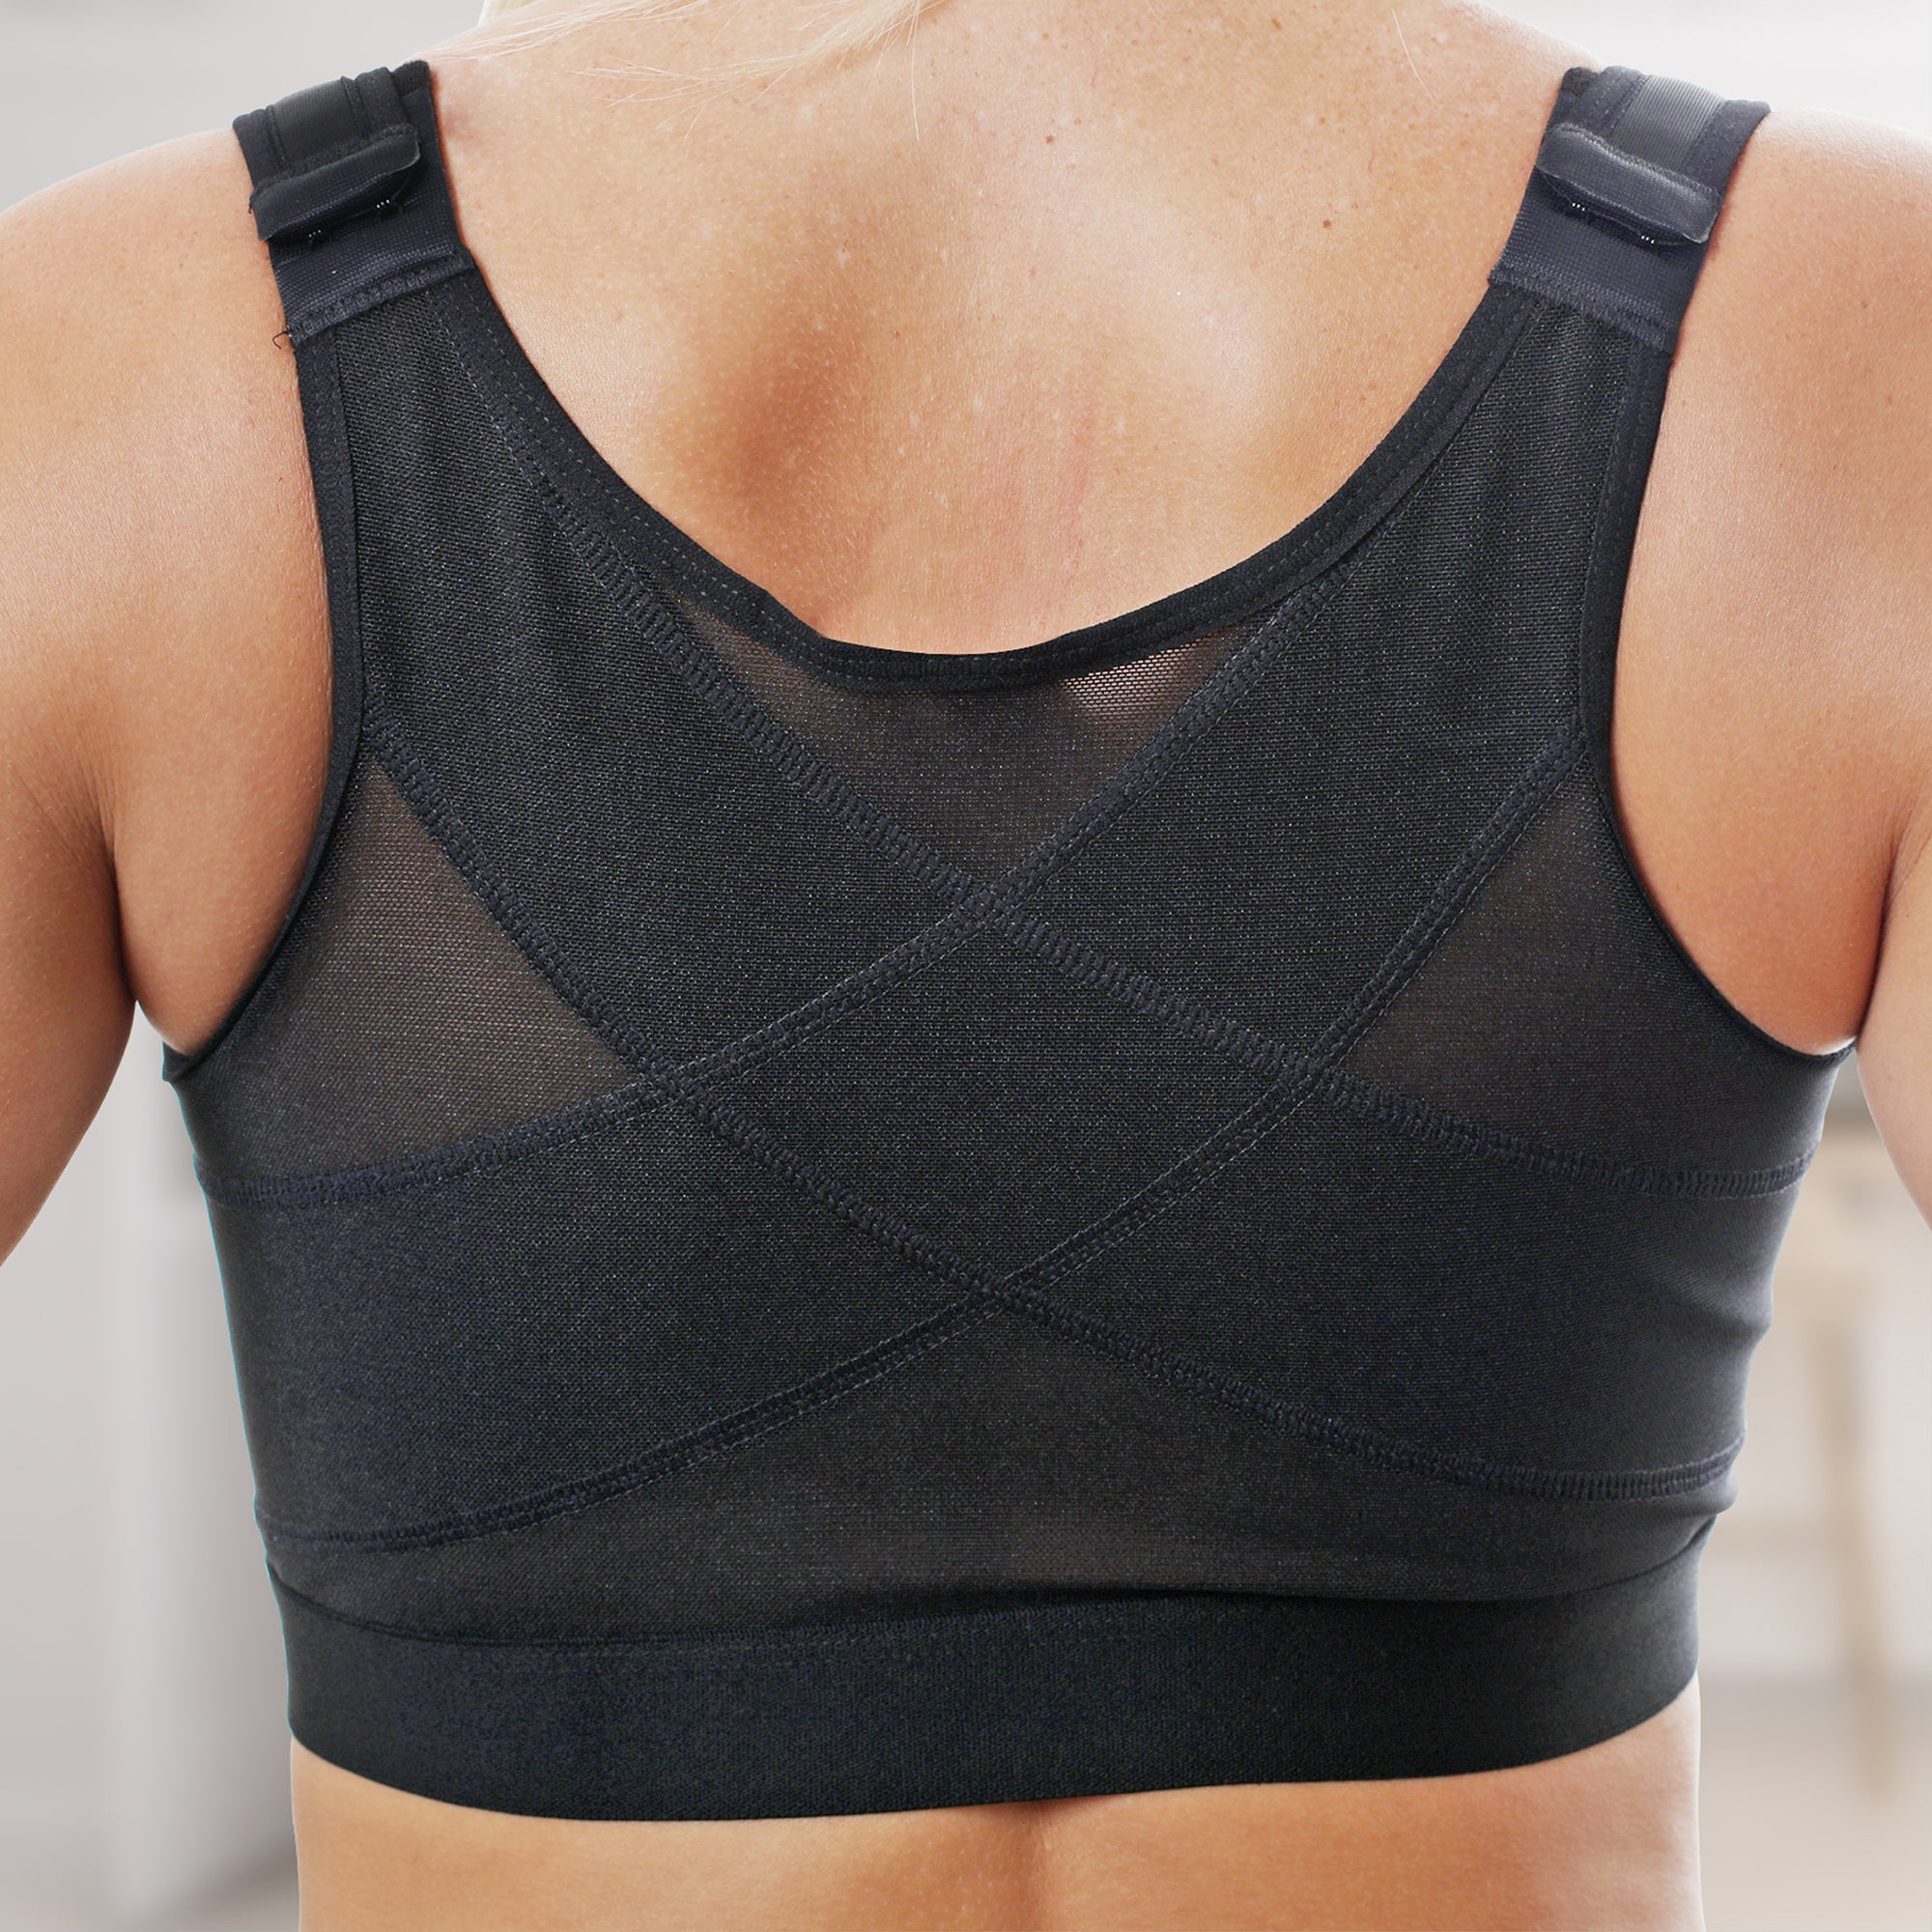 Criss-cross black design on compression surgical bra - back